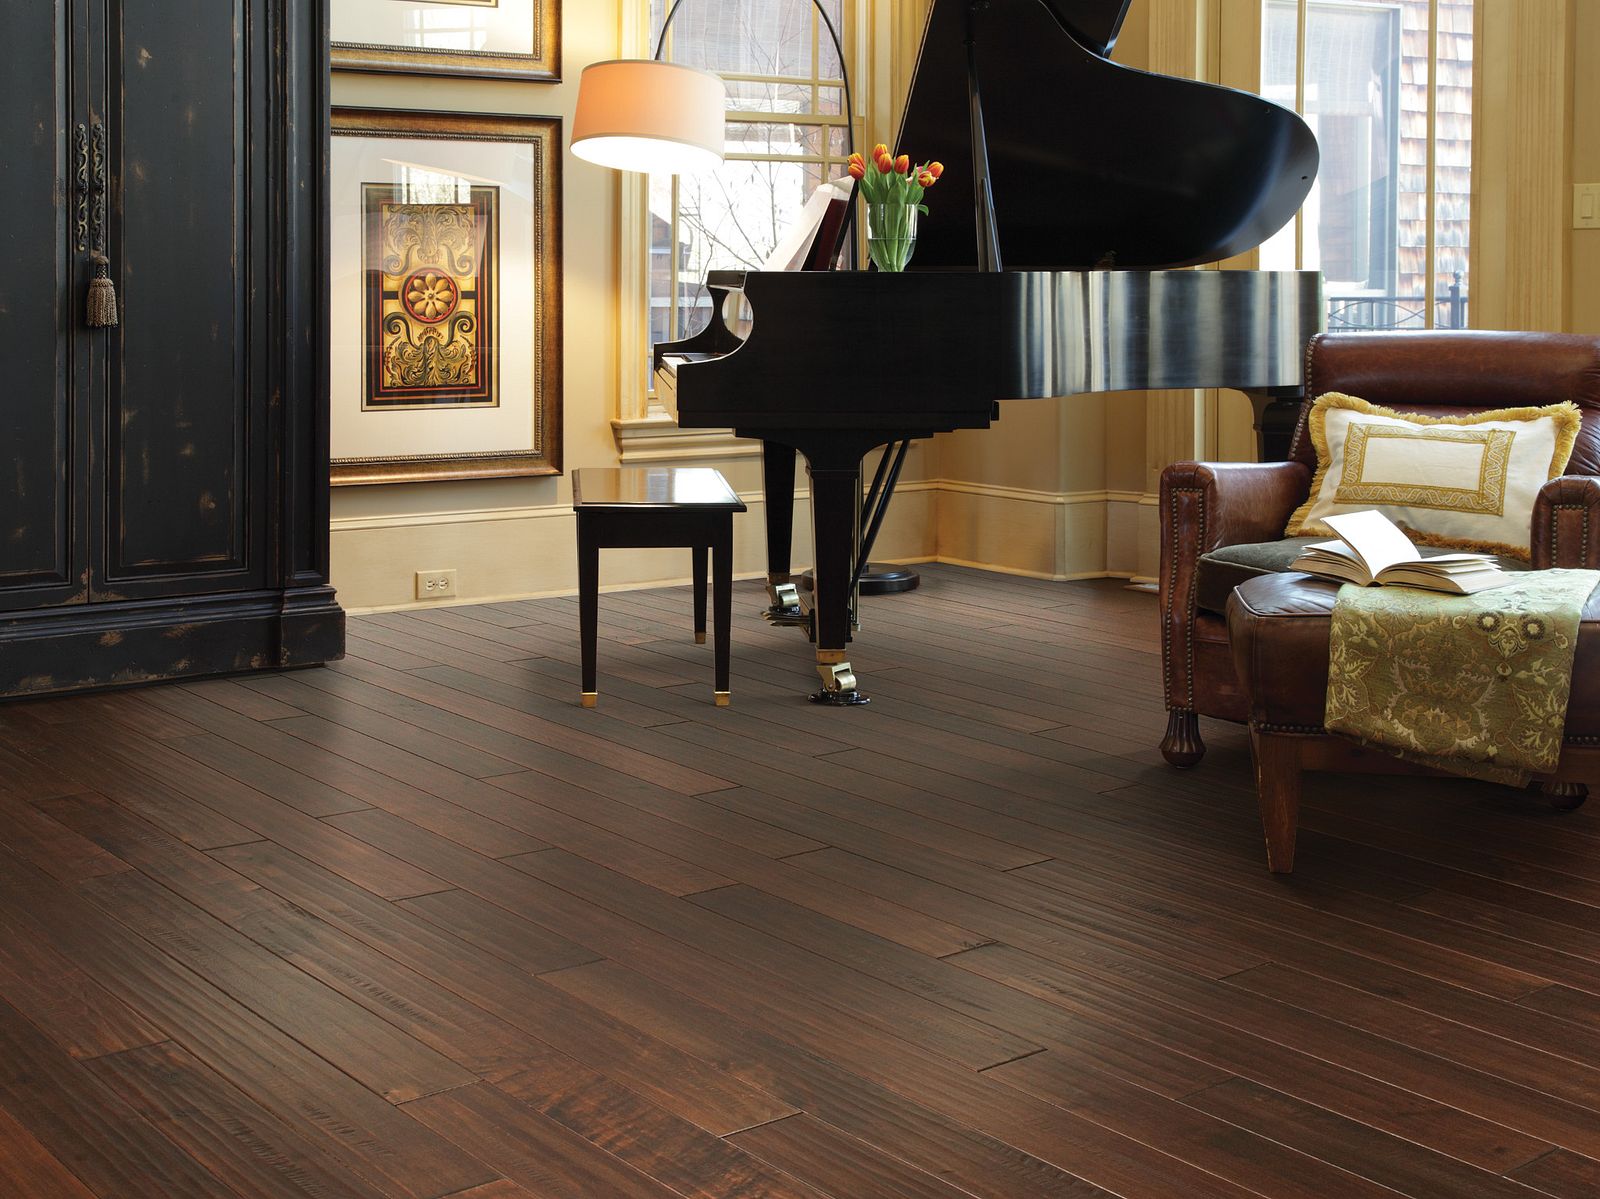 Lengths of Hardwood Flooring